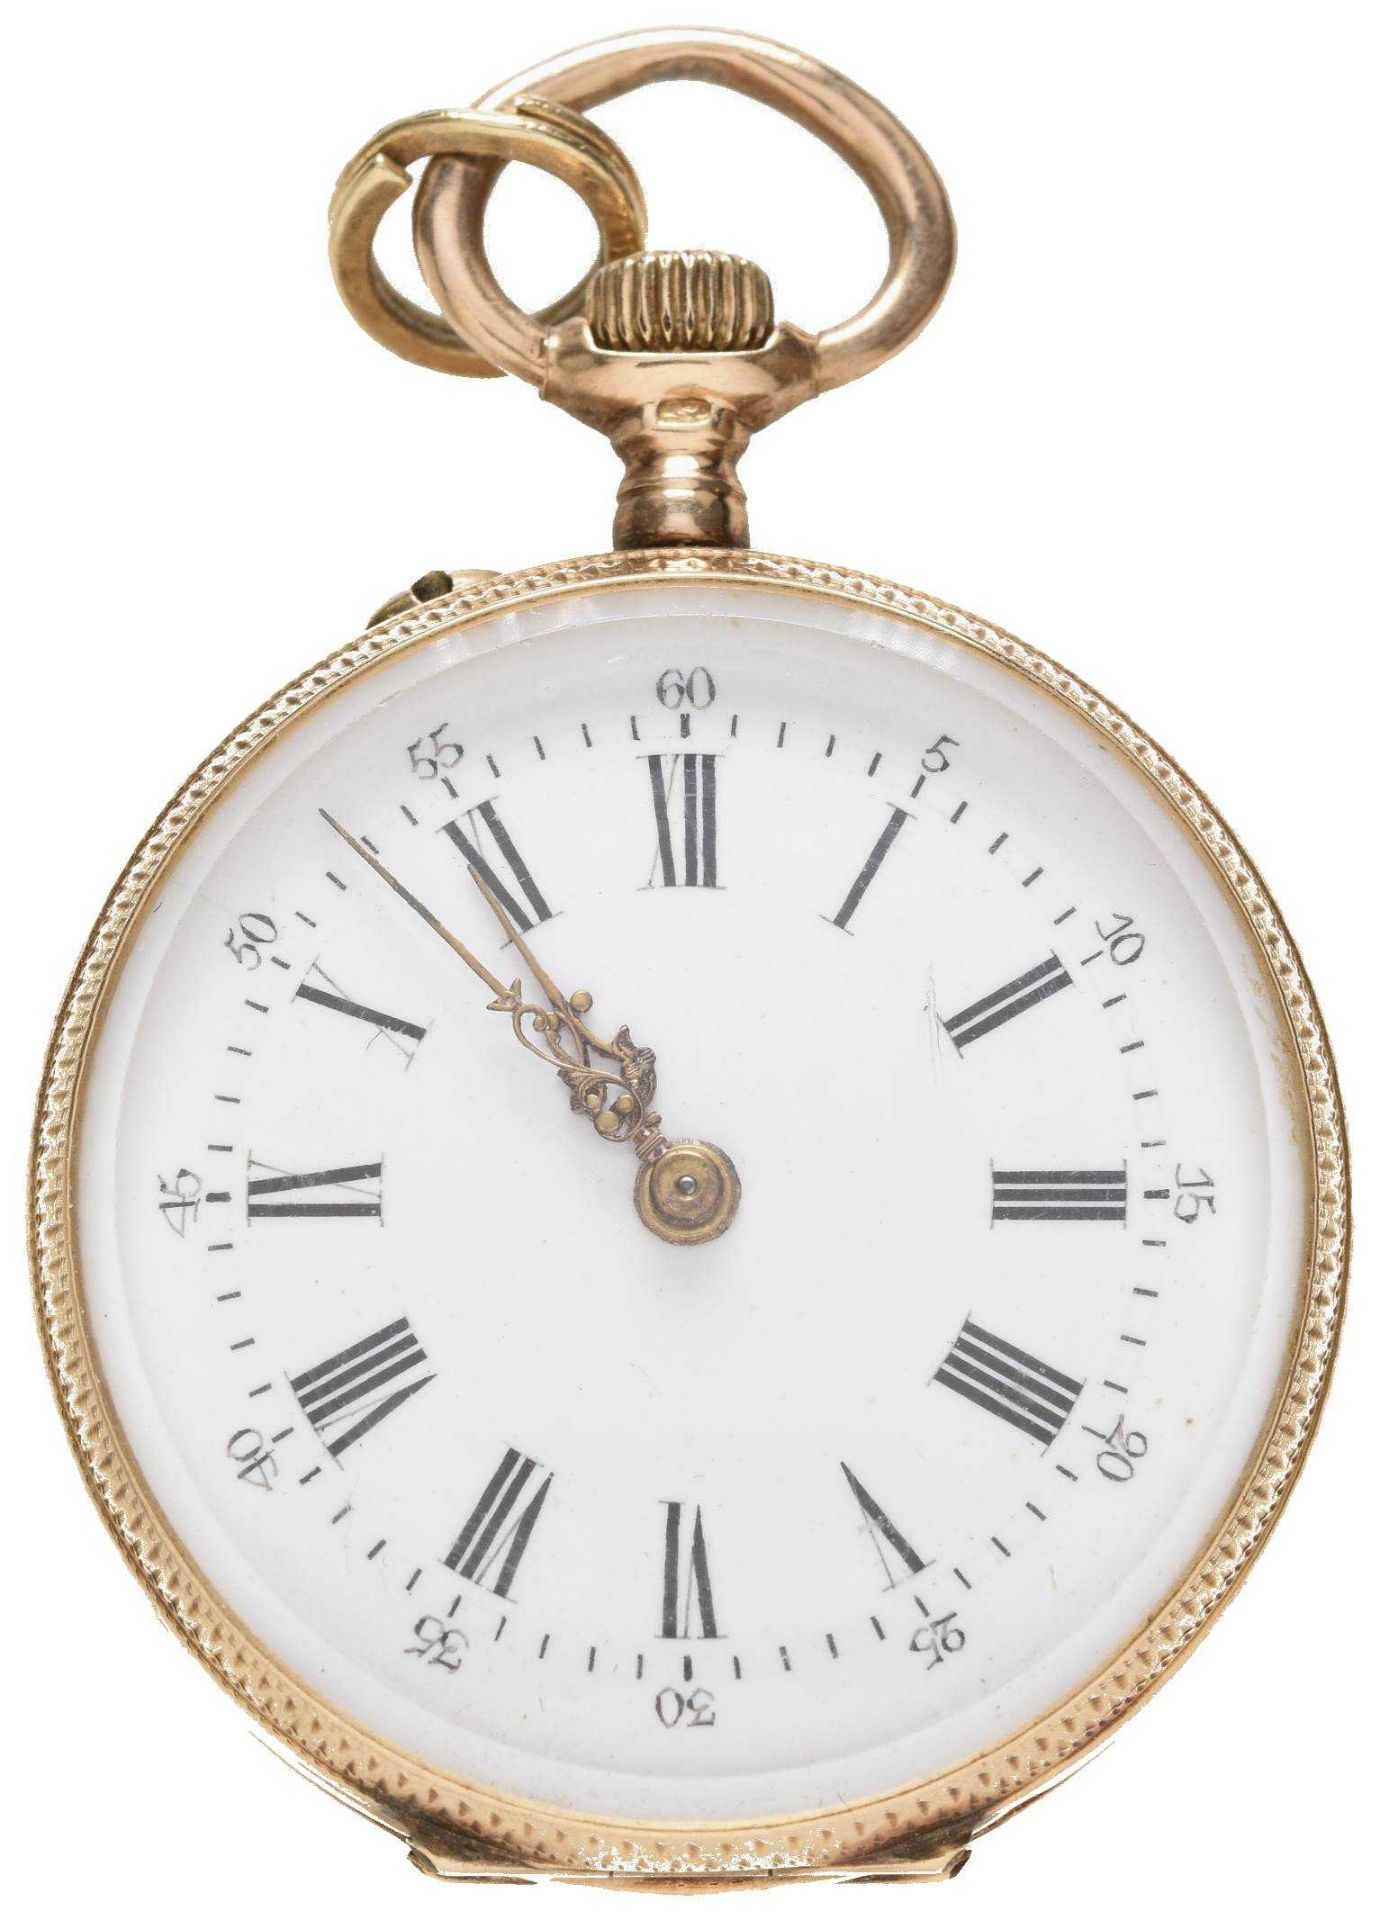 Dainty pocket-watch. Ca. 30 mm, 0.585 Au, manual wind. Enameled dial, black, Arabic indexes, golden